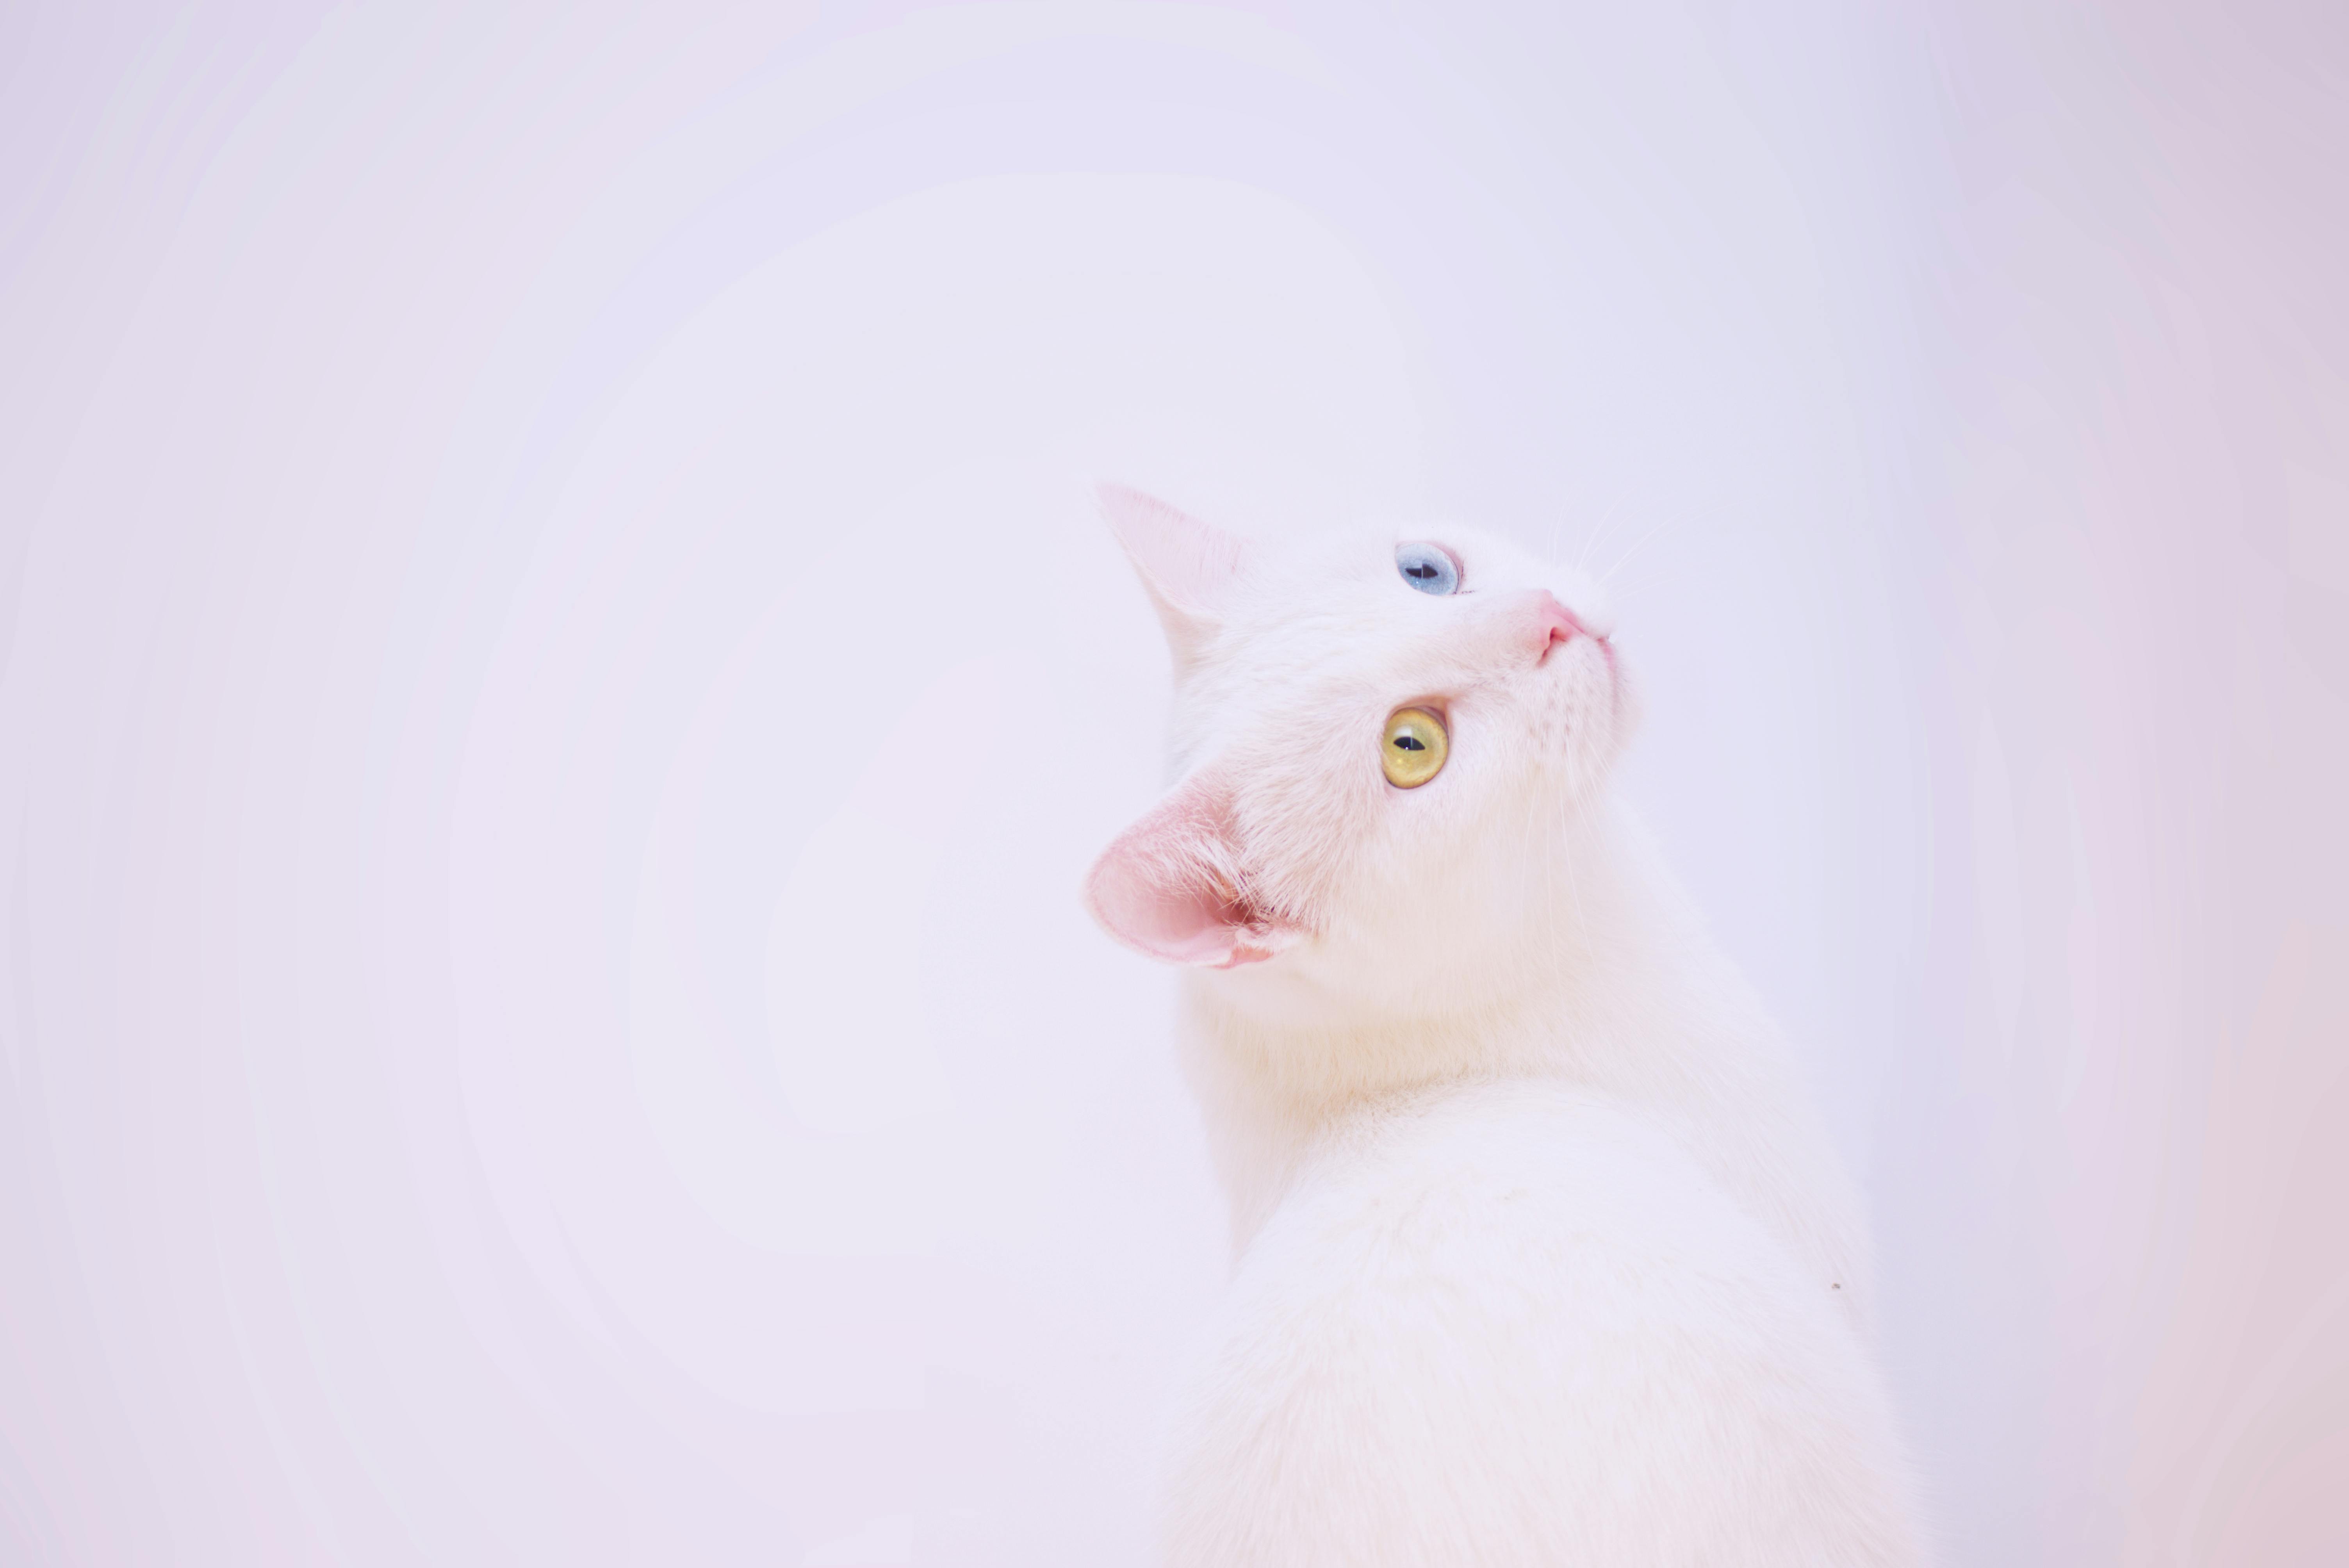 2020492 White Cat Images Stock Photos  Vectors  Shutterstock